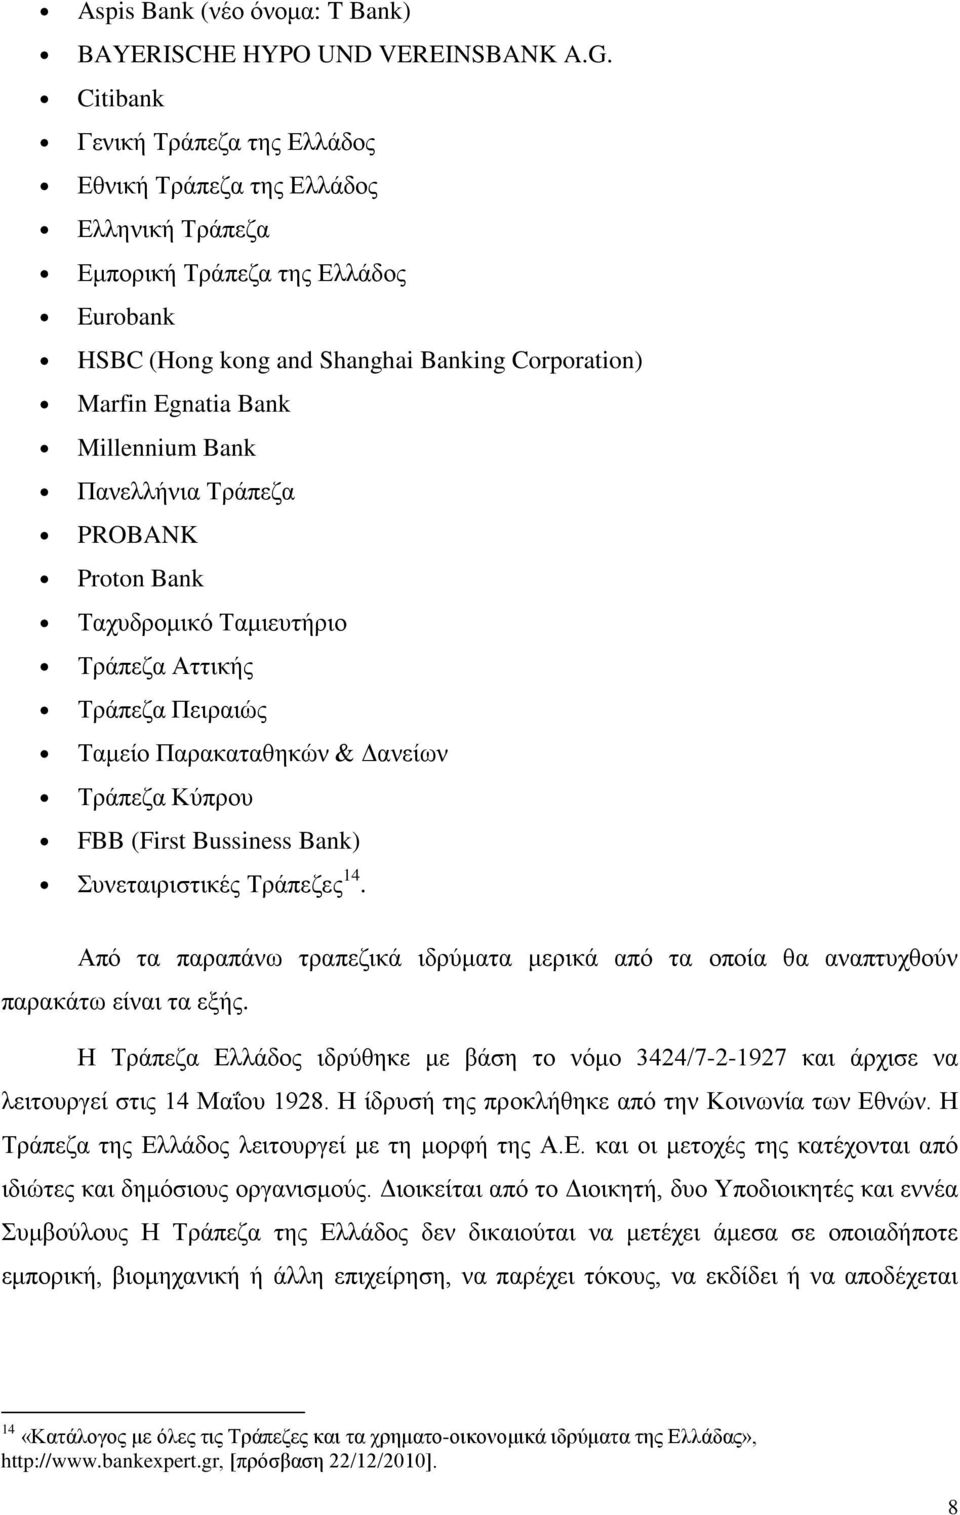 Bank Πανελλήνια Τράπεζα PROBANK Proton Bank Ταχυδρομικό Ταμιευτήριο Τράπεζα Αττικής Τράπεζα Πειραιώς Ταμείο Παρακαταθηκών & Δανείων Τράπεζα Κύπρου FBB (First Bussiness Bank) Συνεταιριστικές Τράπεζες